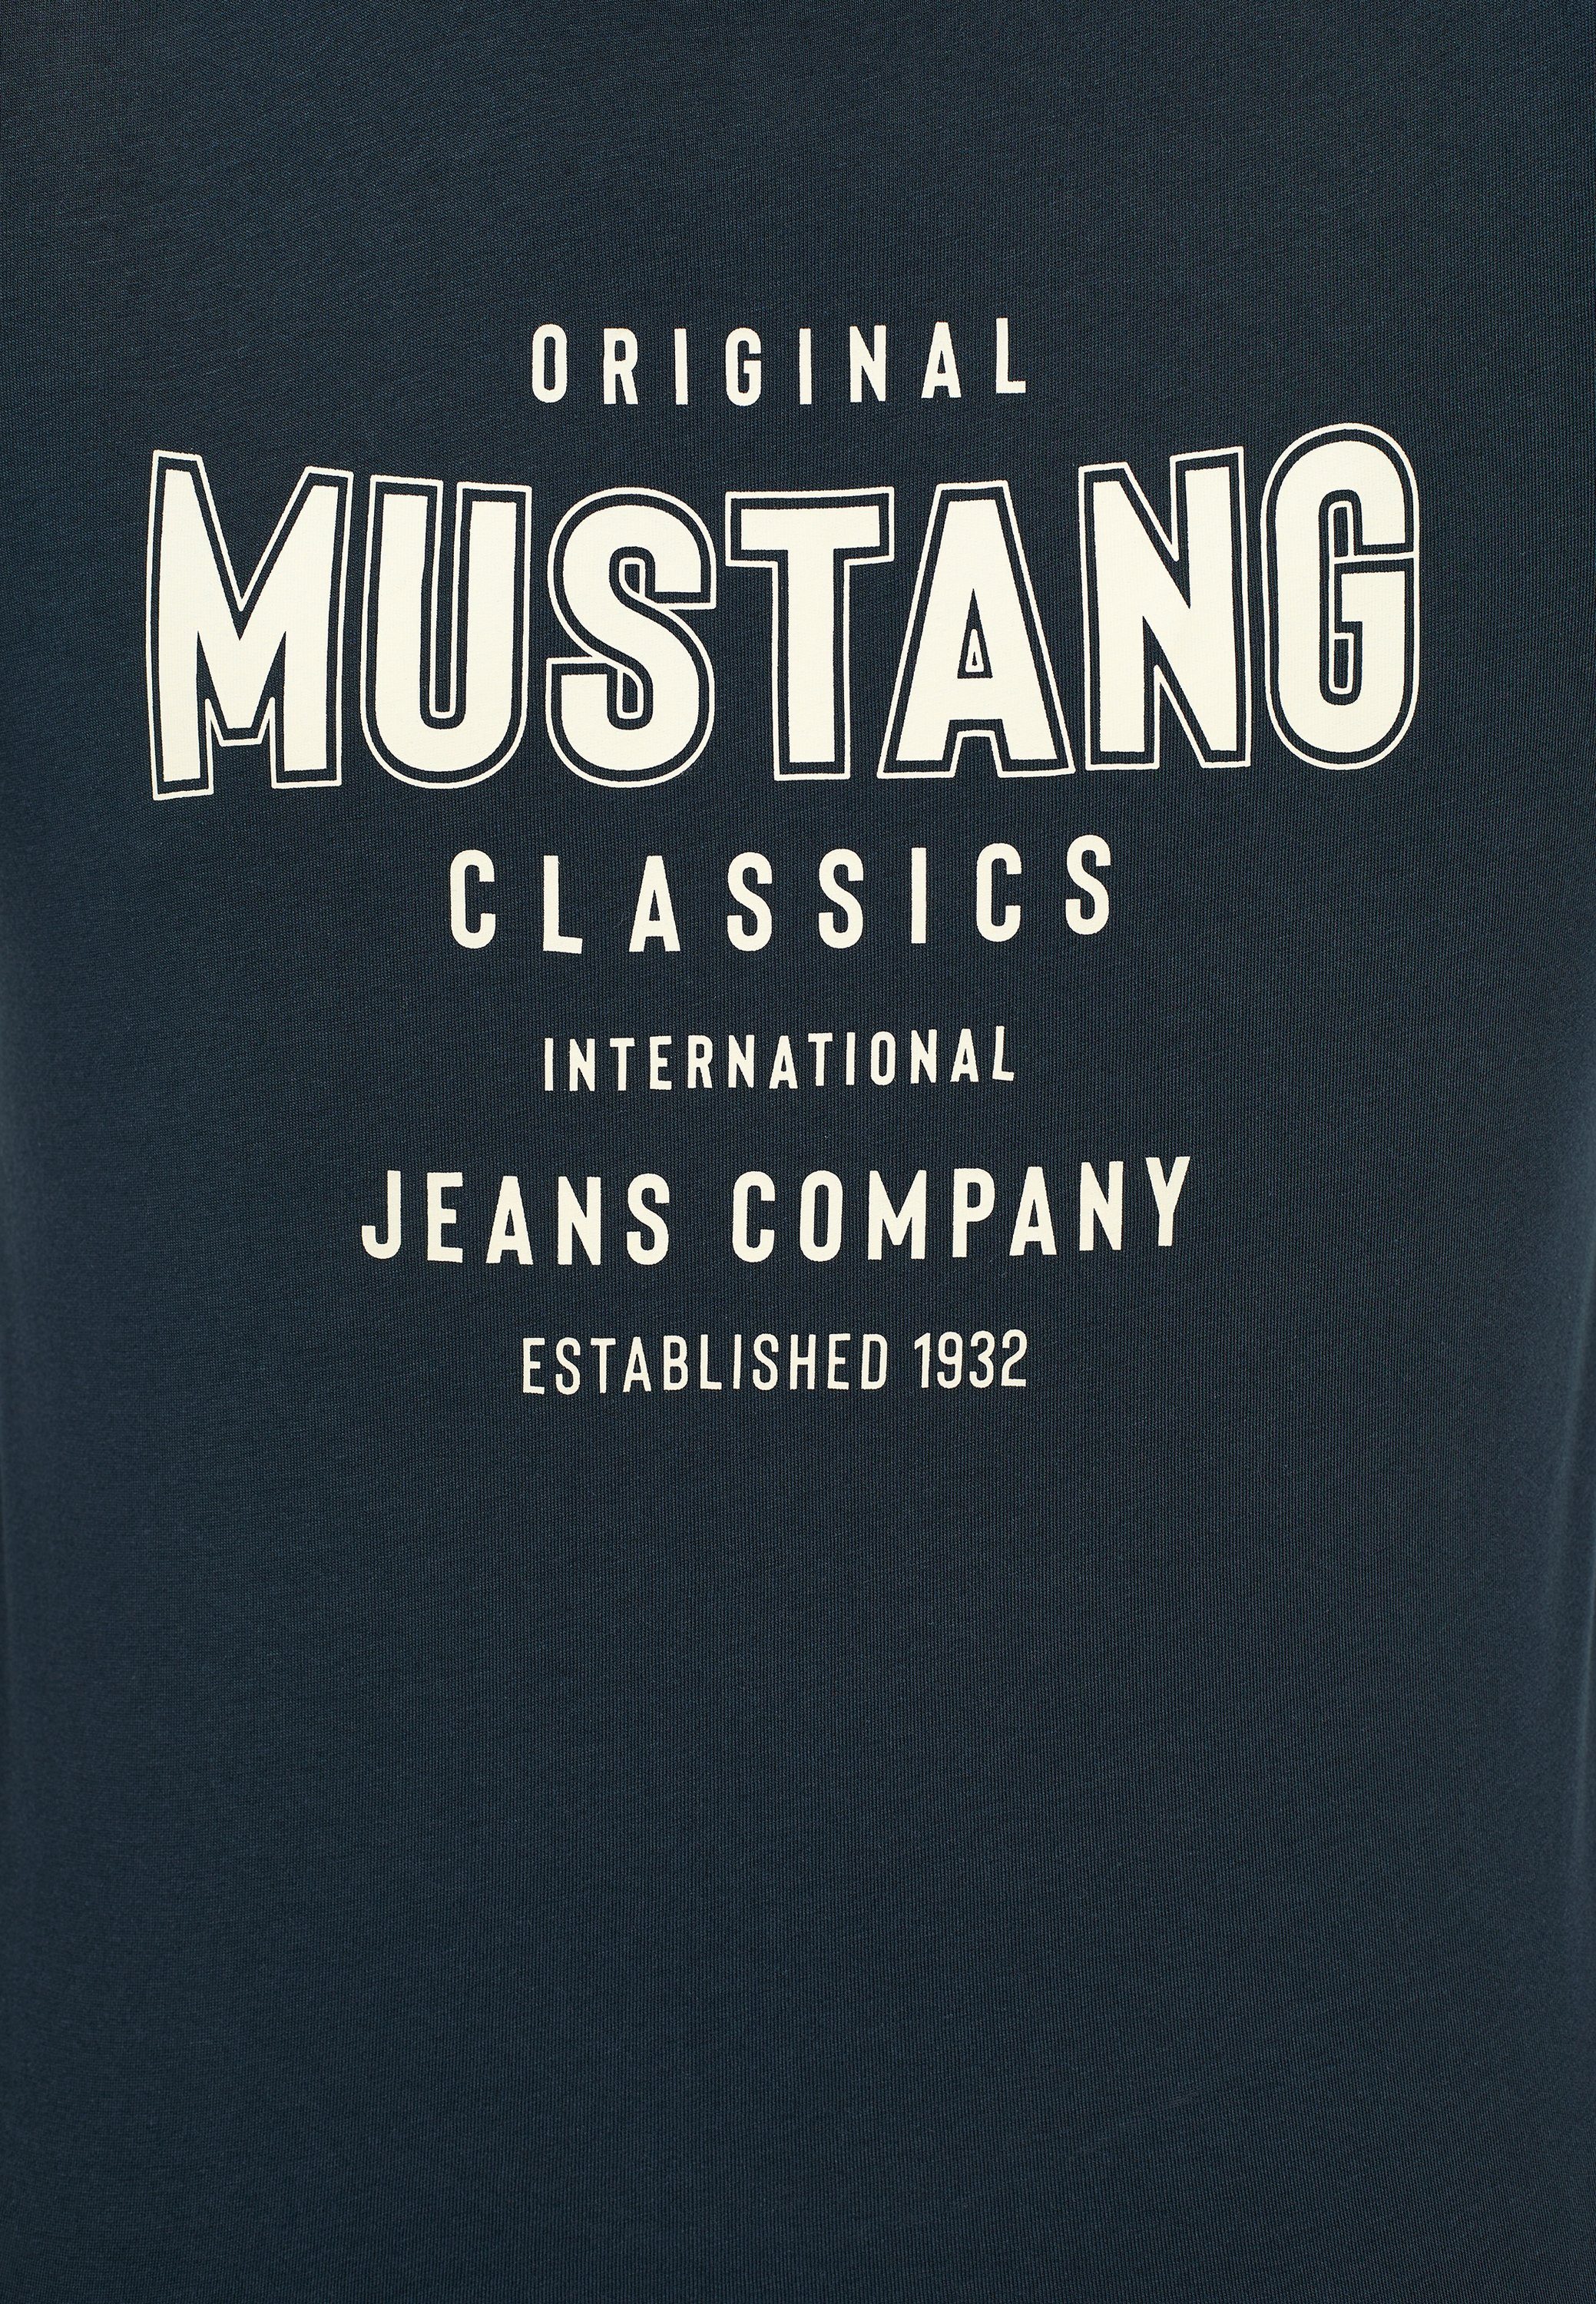 Print-Shirt Kurzarmshirt Mustang navy MUSTANG